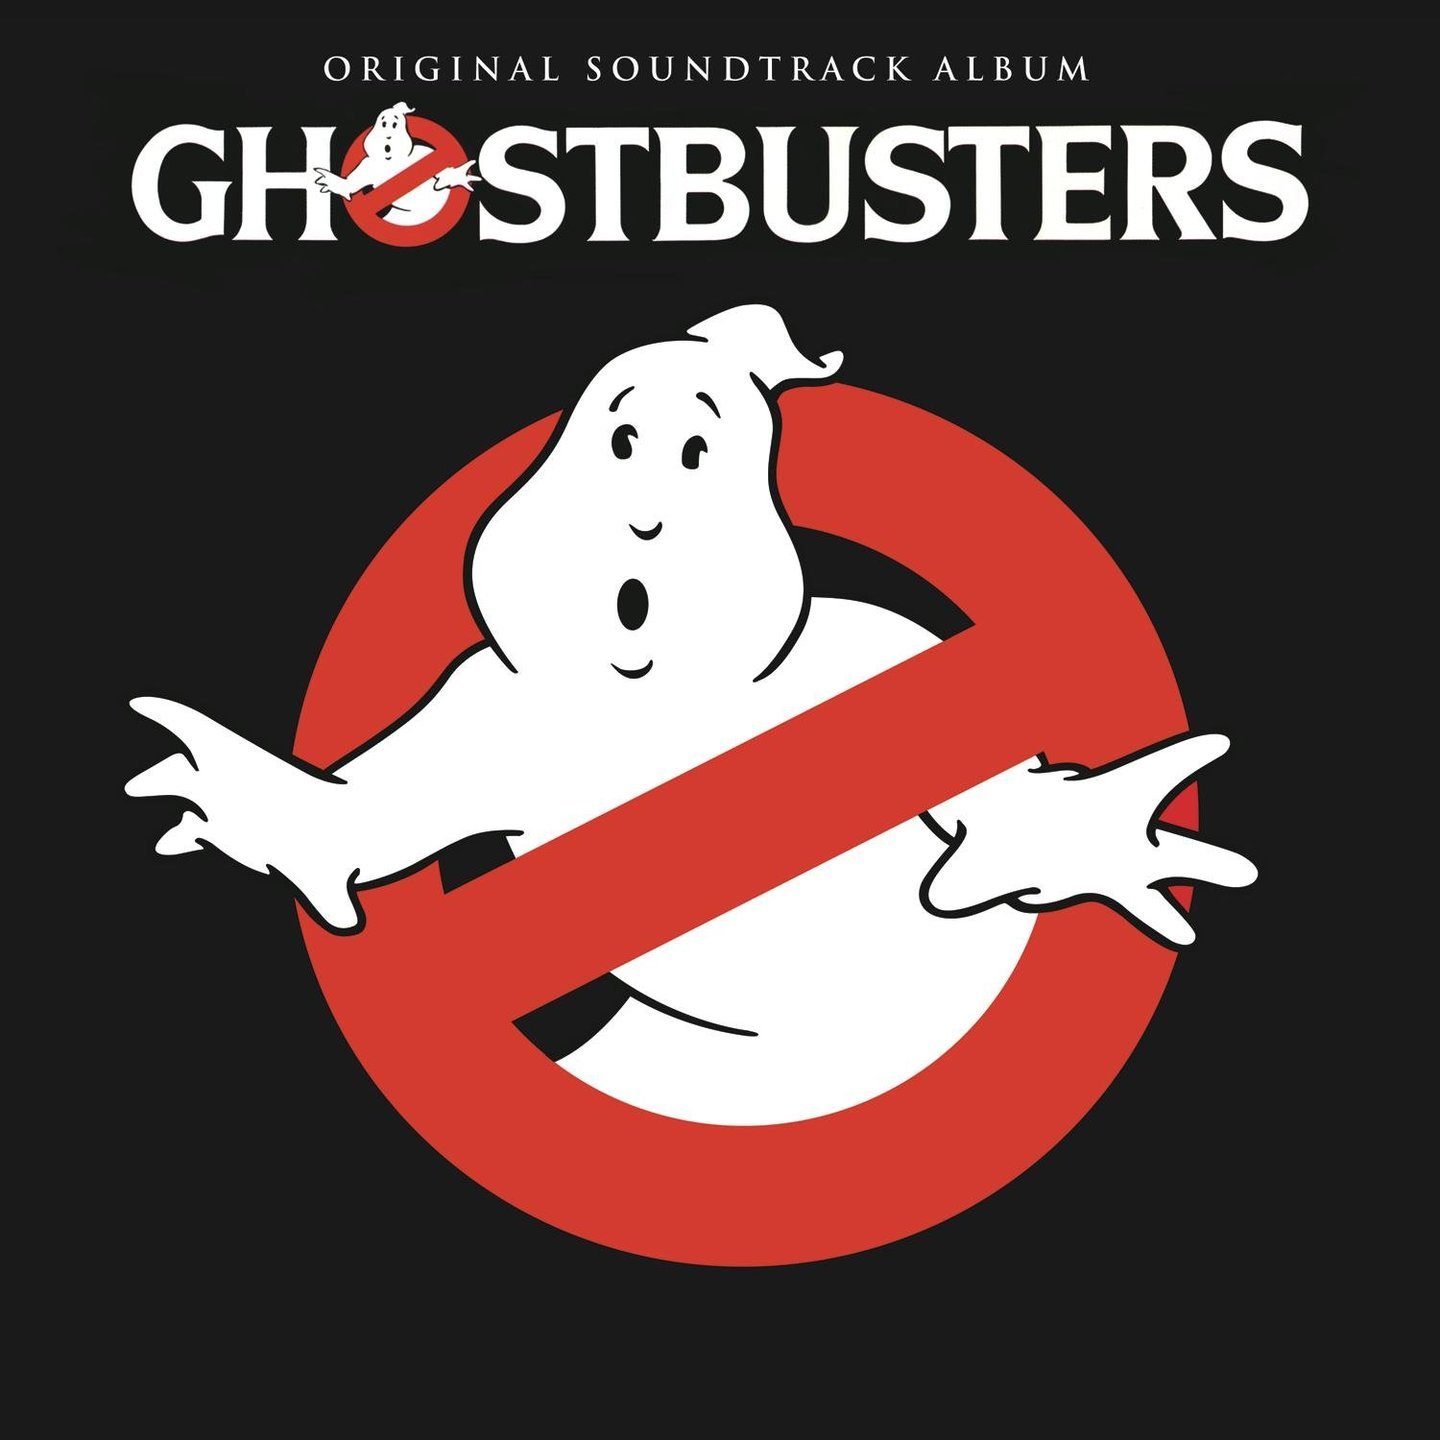 VA - Ghostbusters Original Soundtrack Album LP